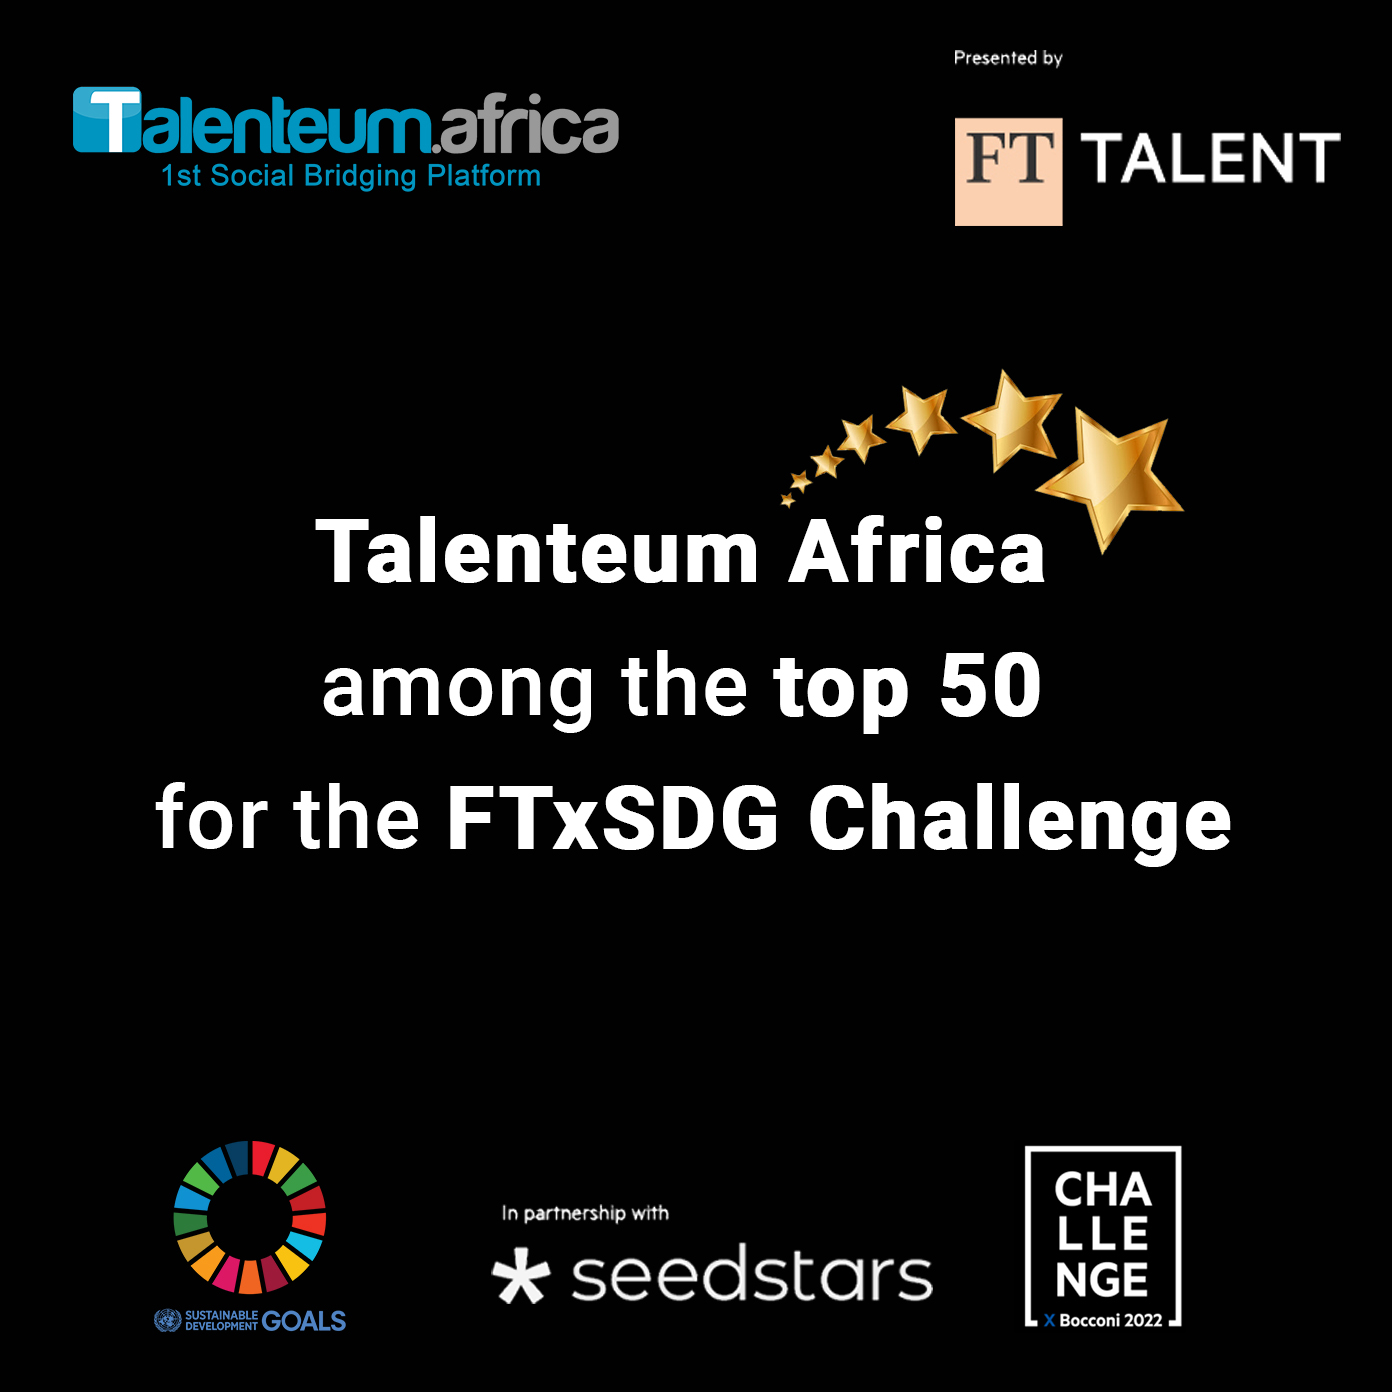 Talenteum Africa among the top 50 startups